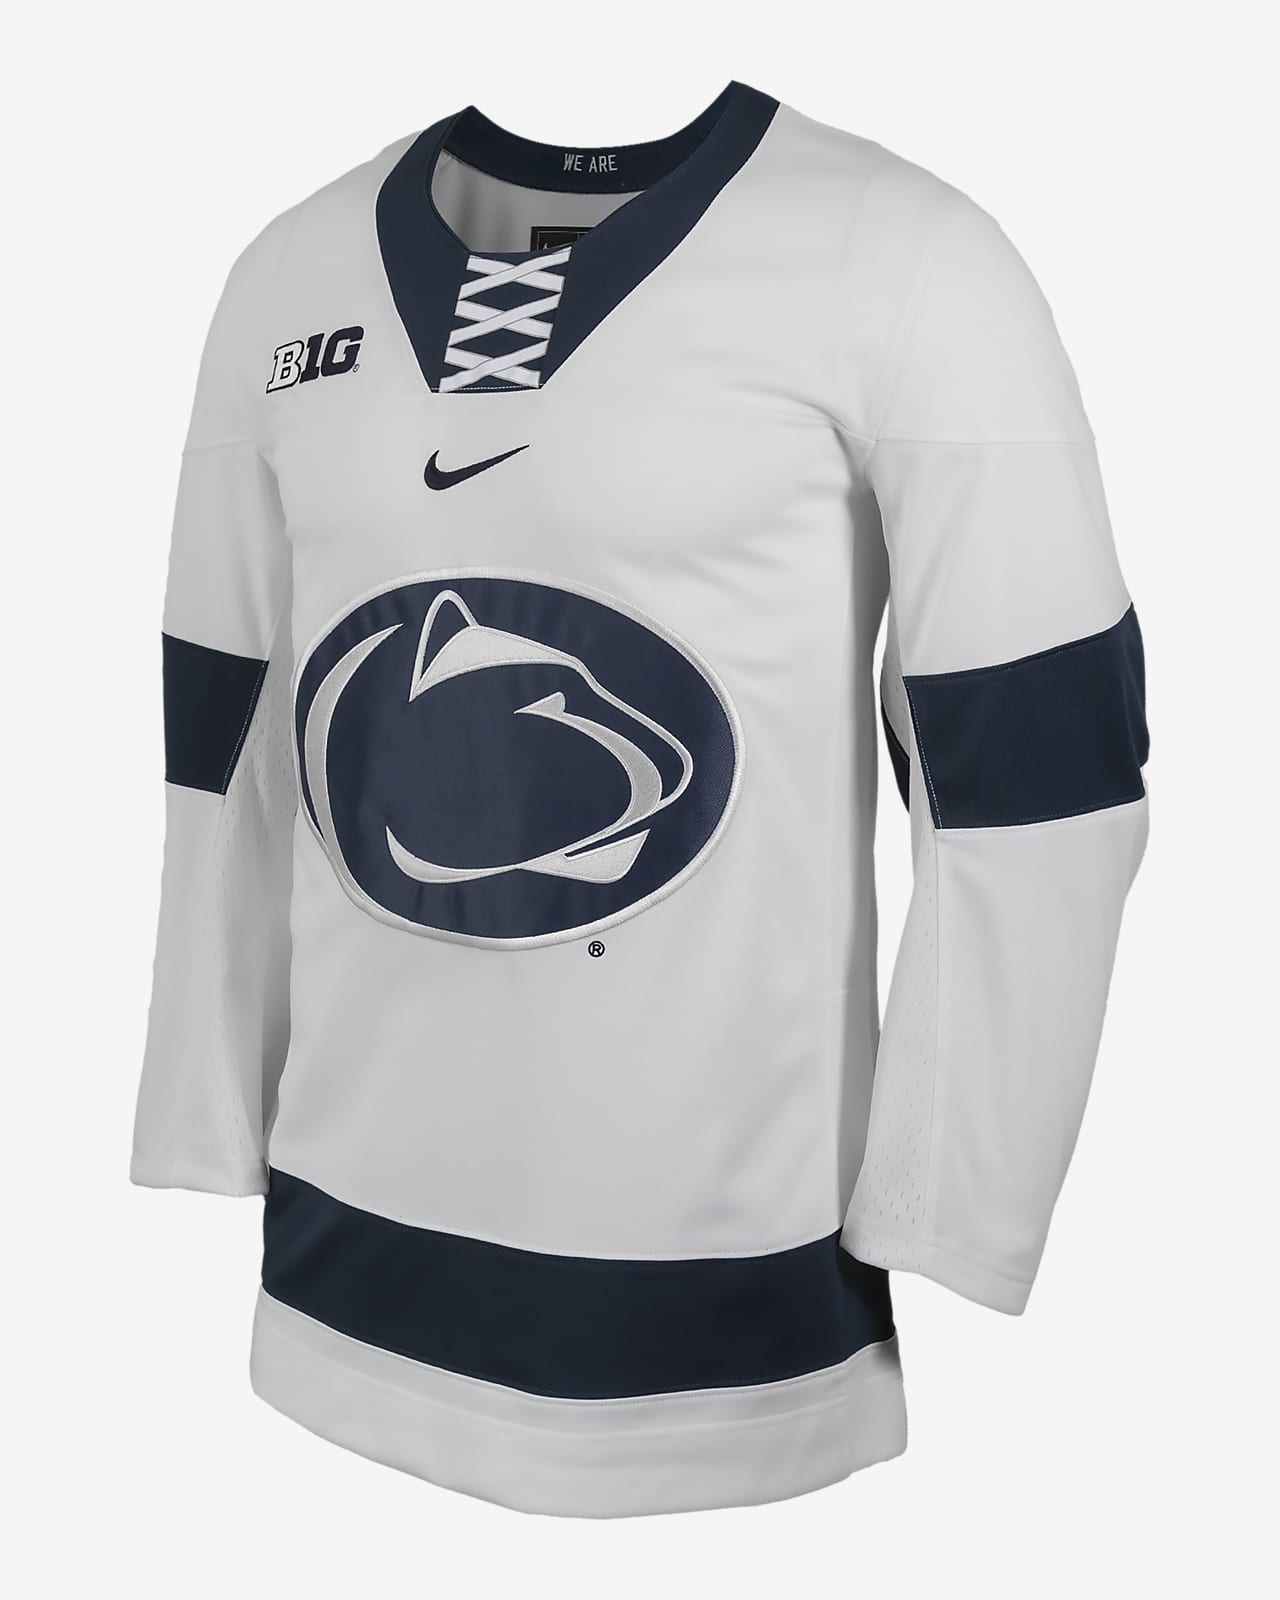 Penn State Men's Nike College Hockey Jersey